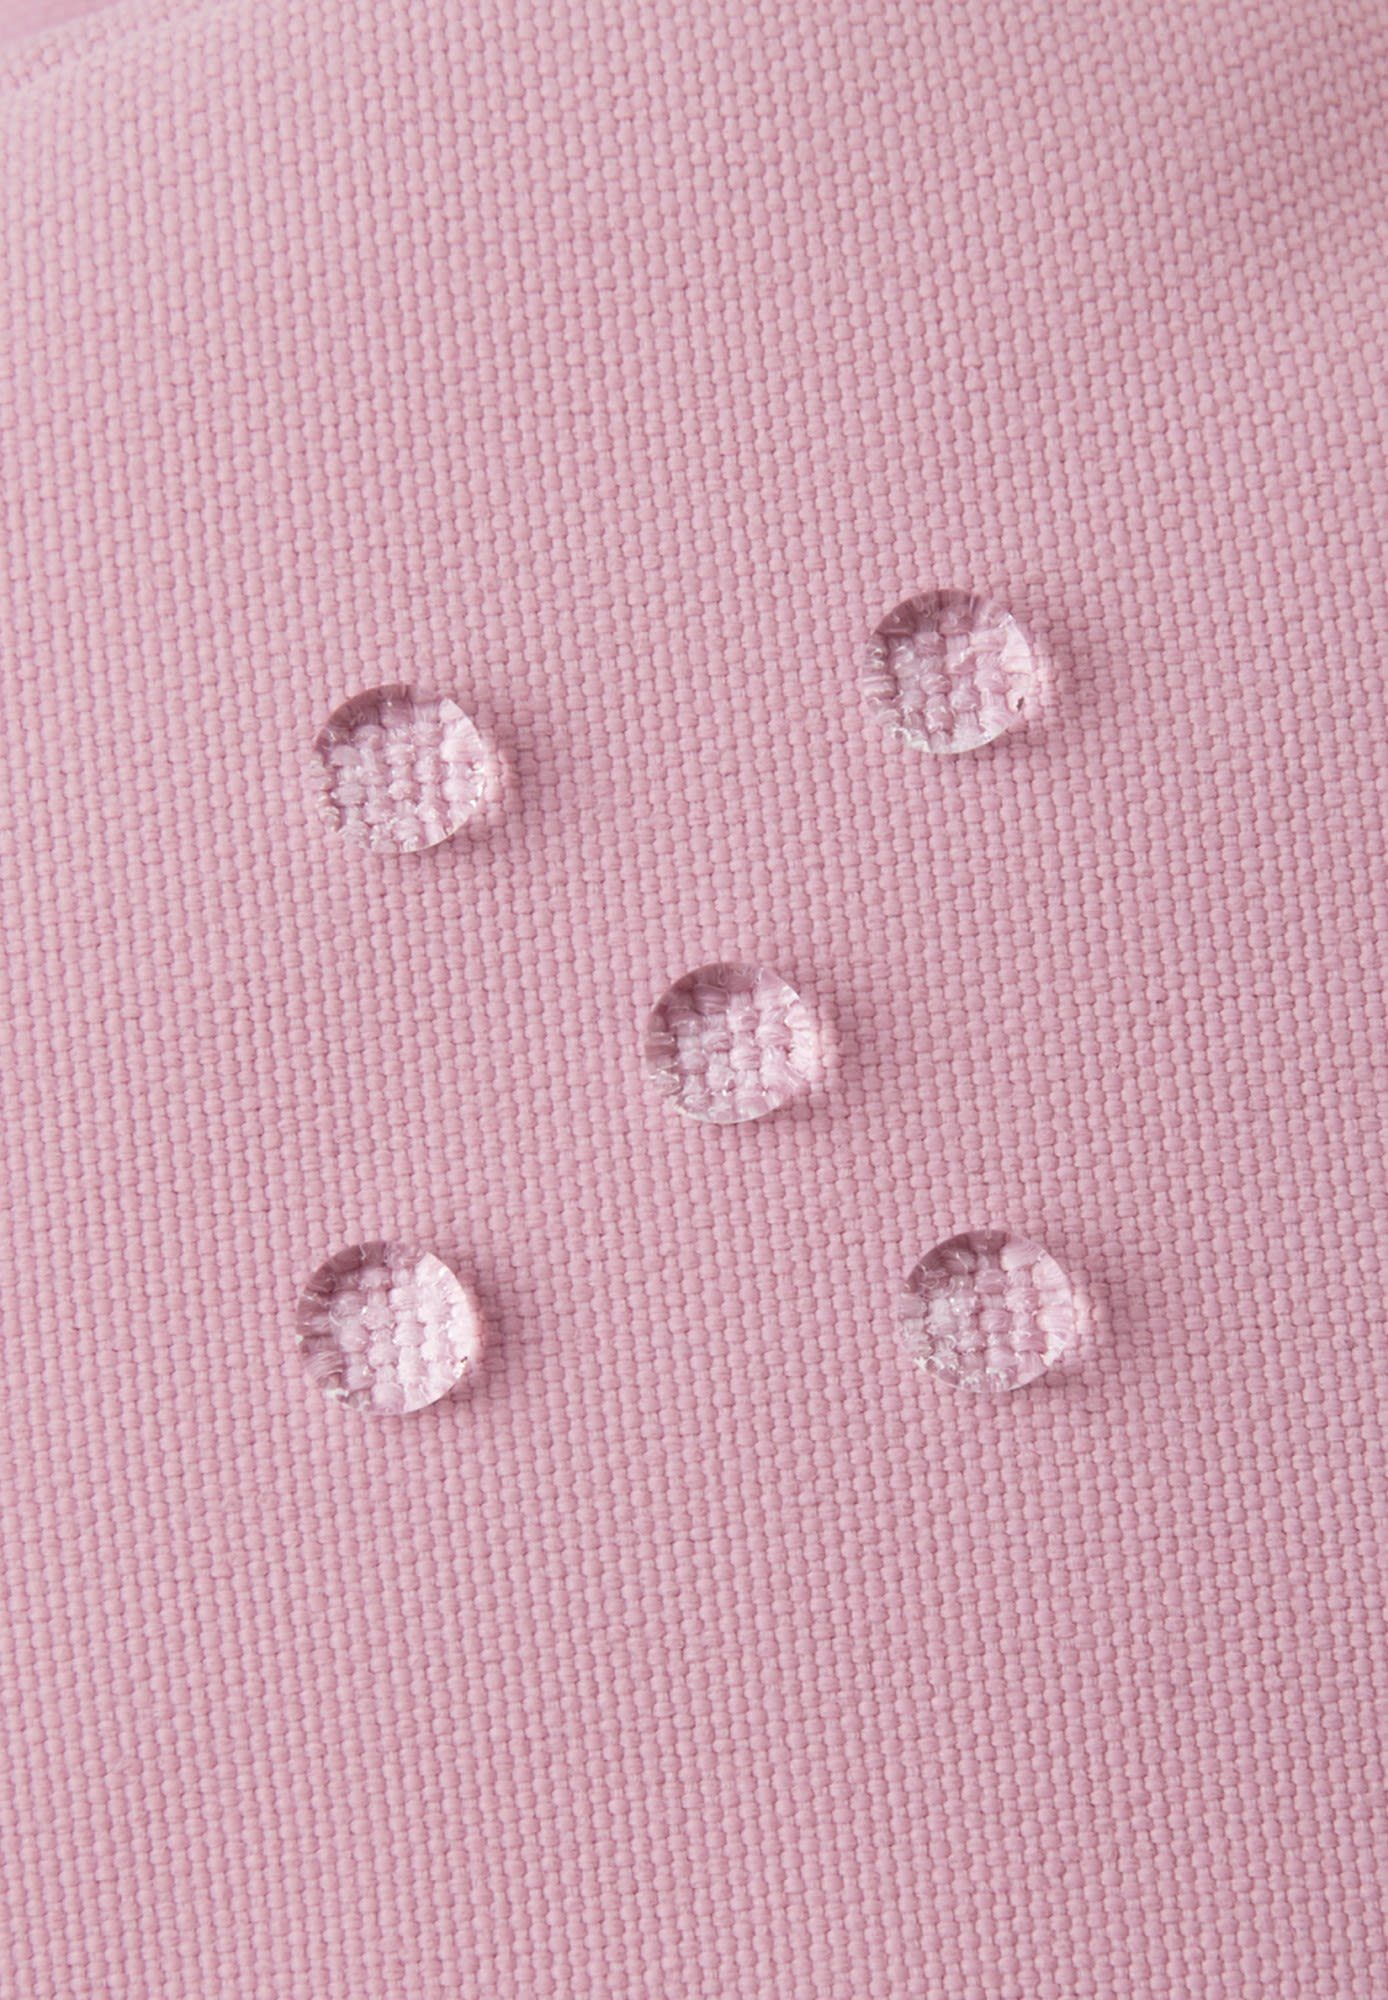 Pink Accessoires Ote Fleecehandschuhe Mittens Kids reima Kinder Reima Grey